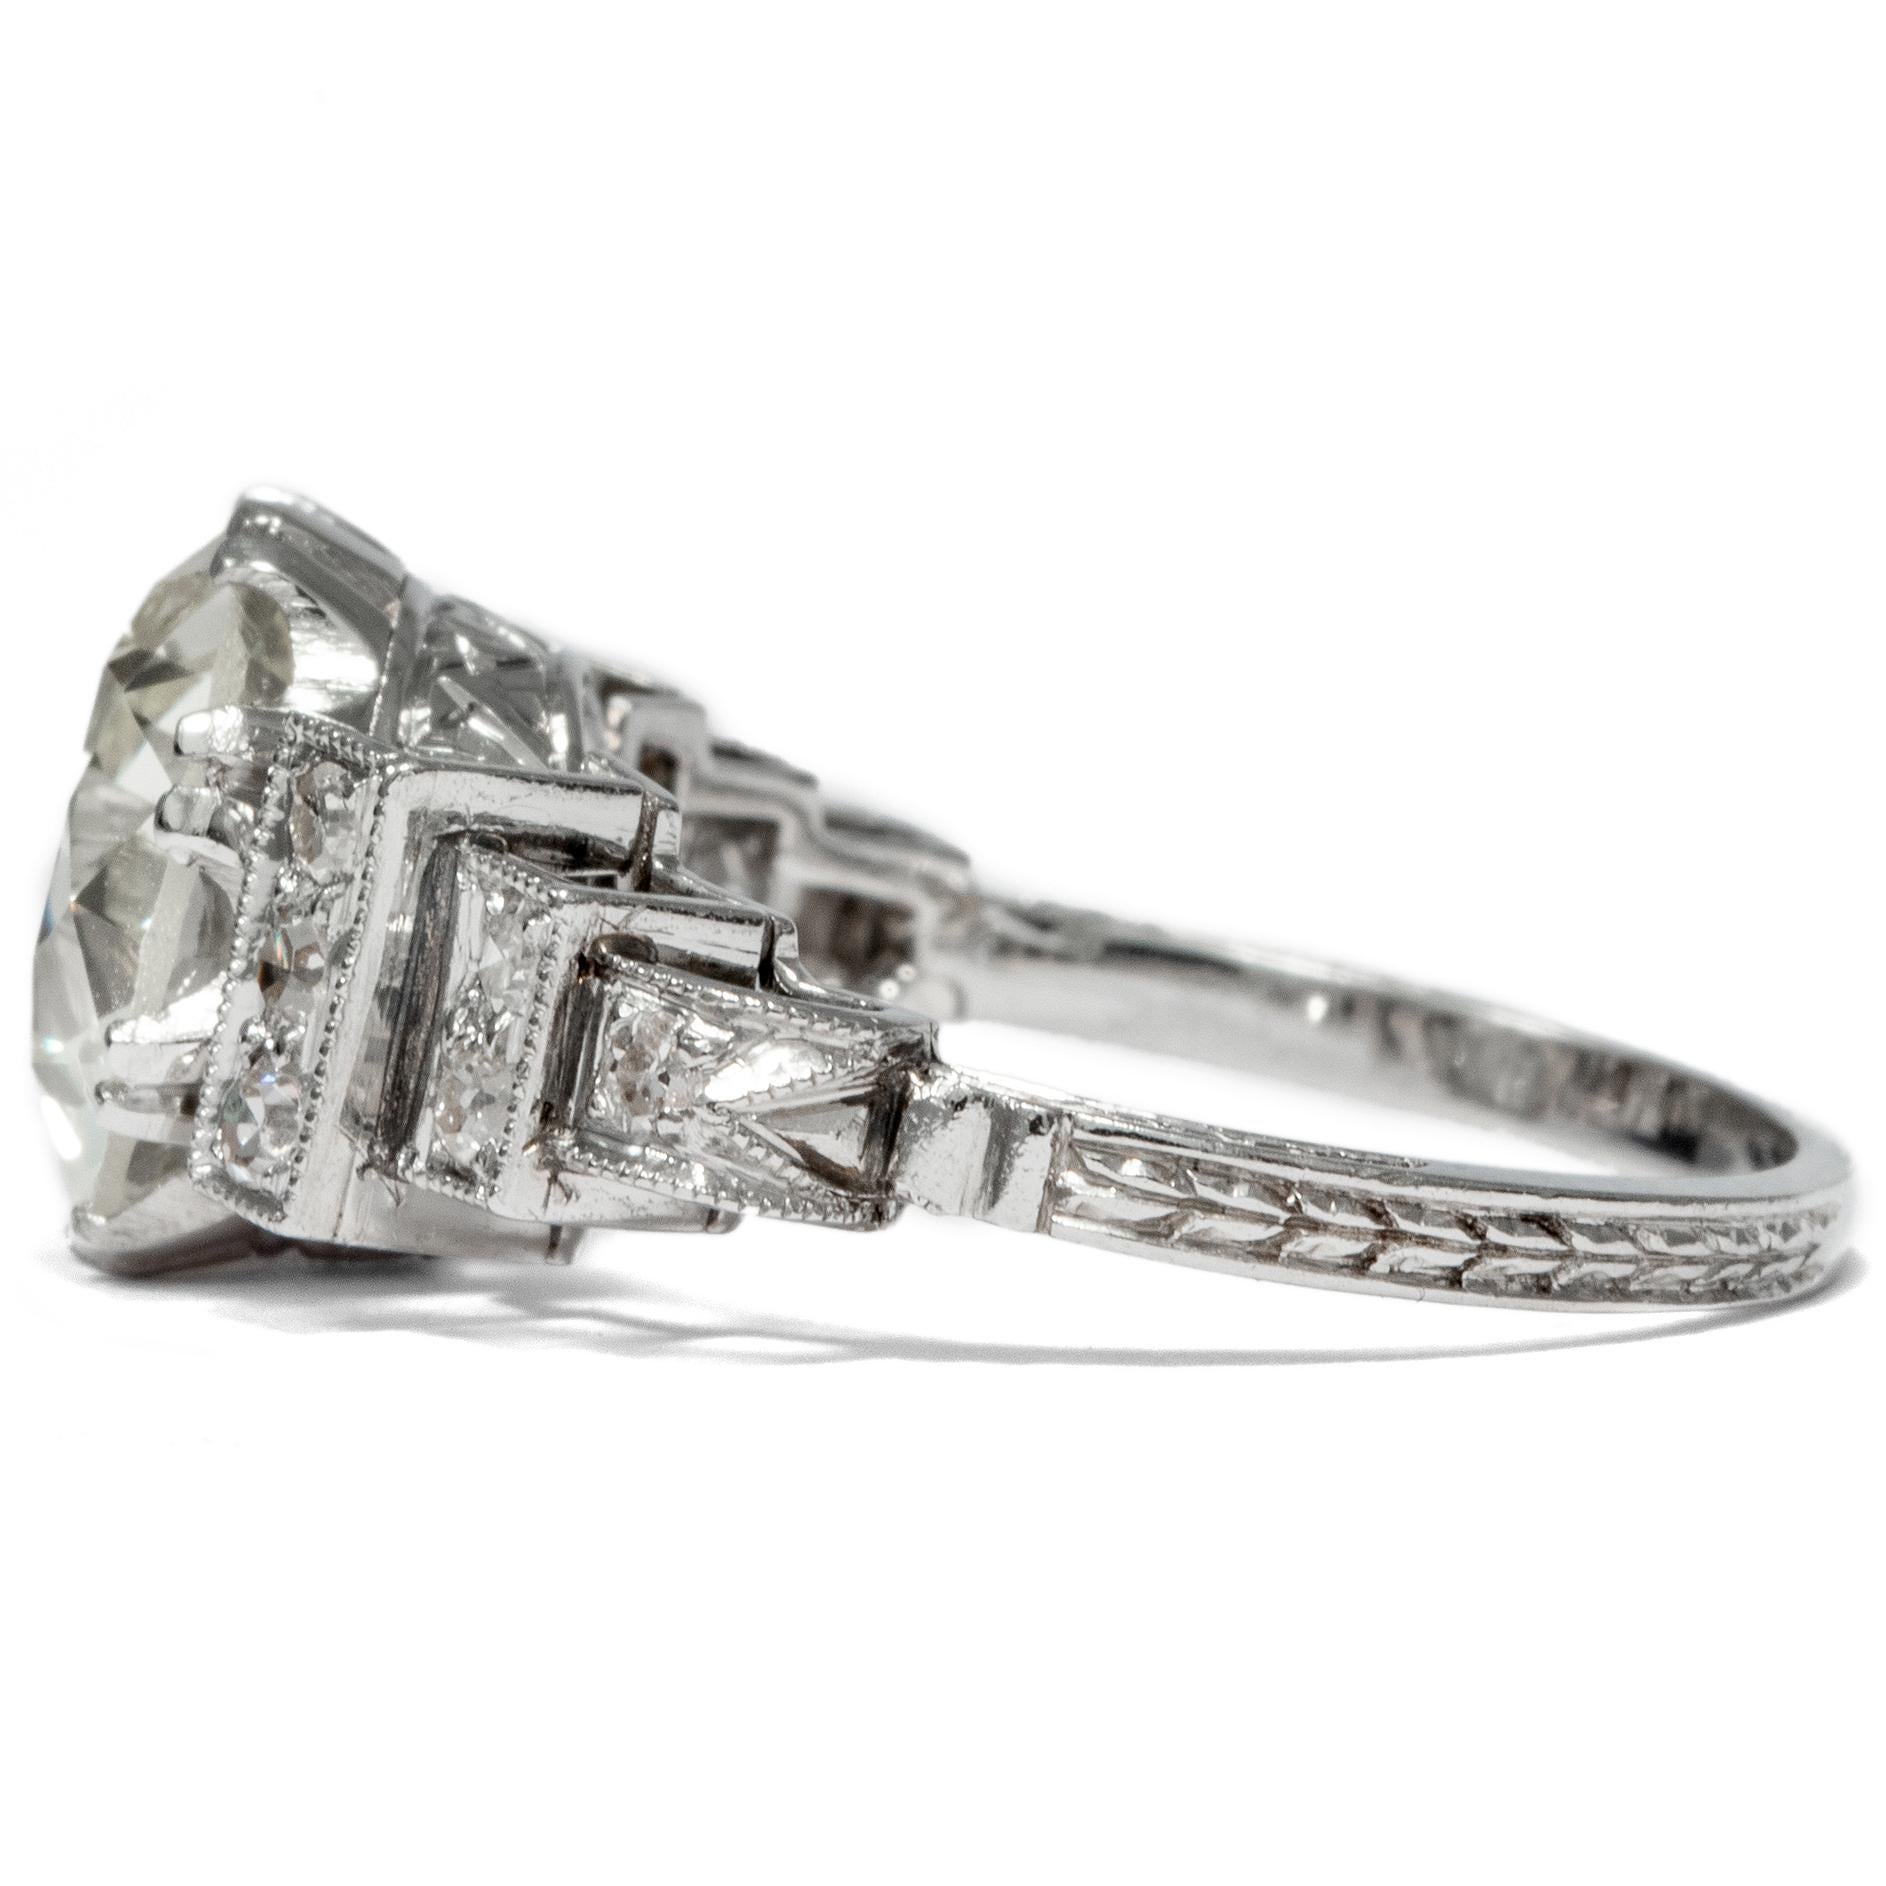 Old European Cut Art Déco circa 1925, Certified 3.99 Carat Diamond Solitaire Engagement Ring